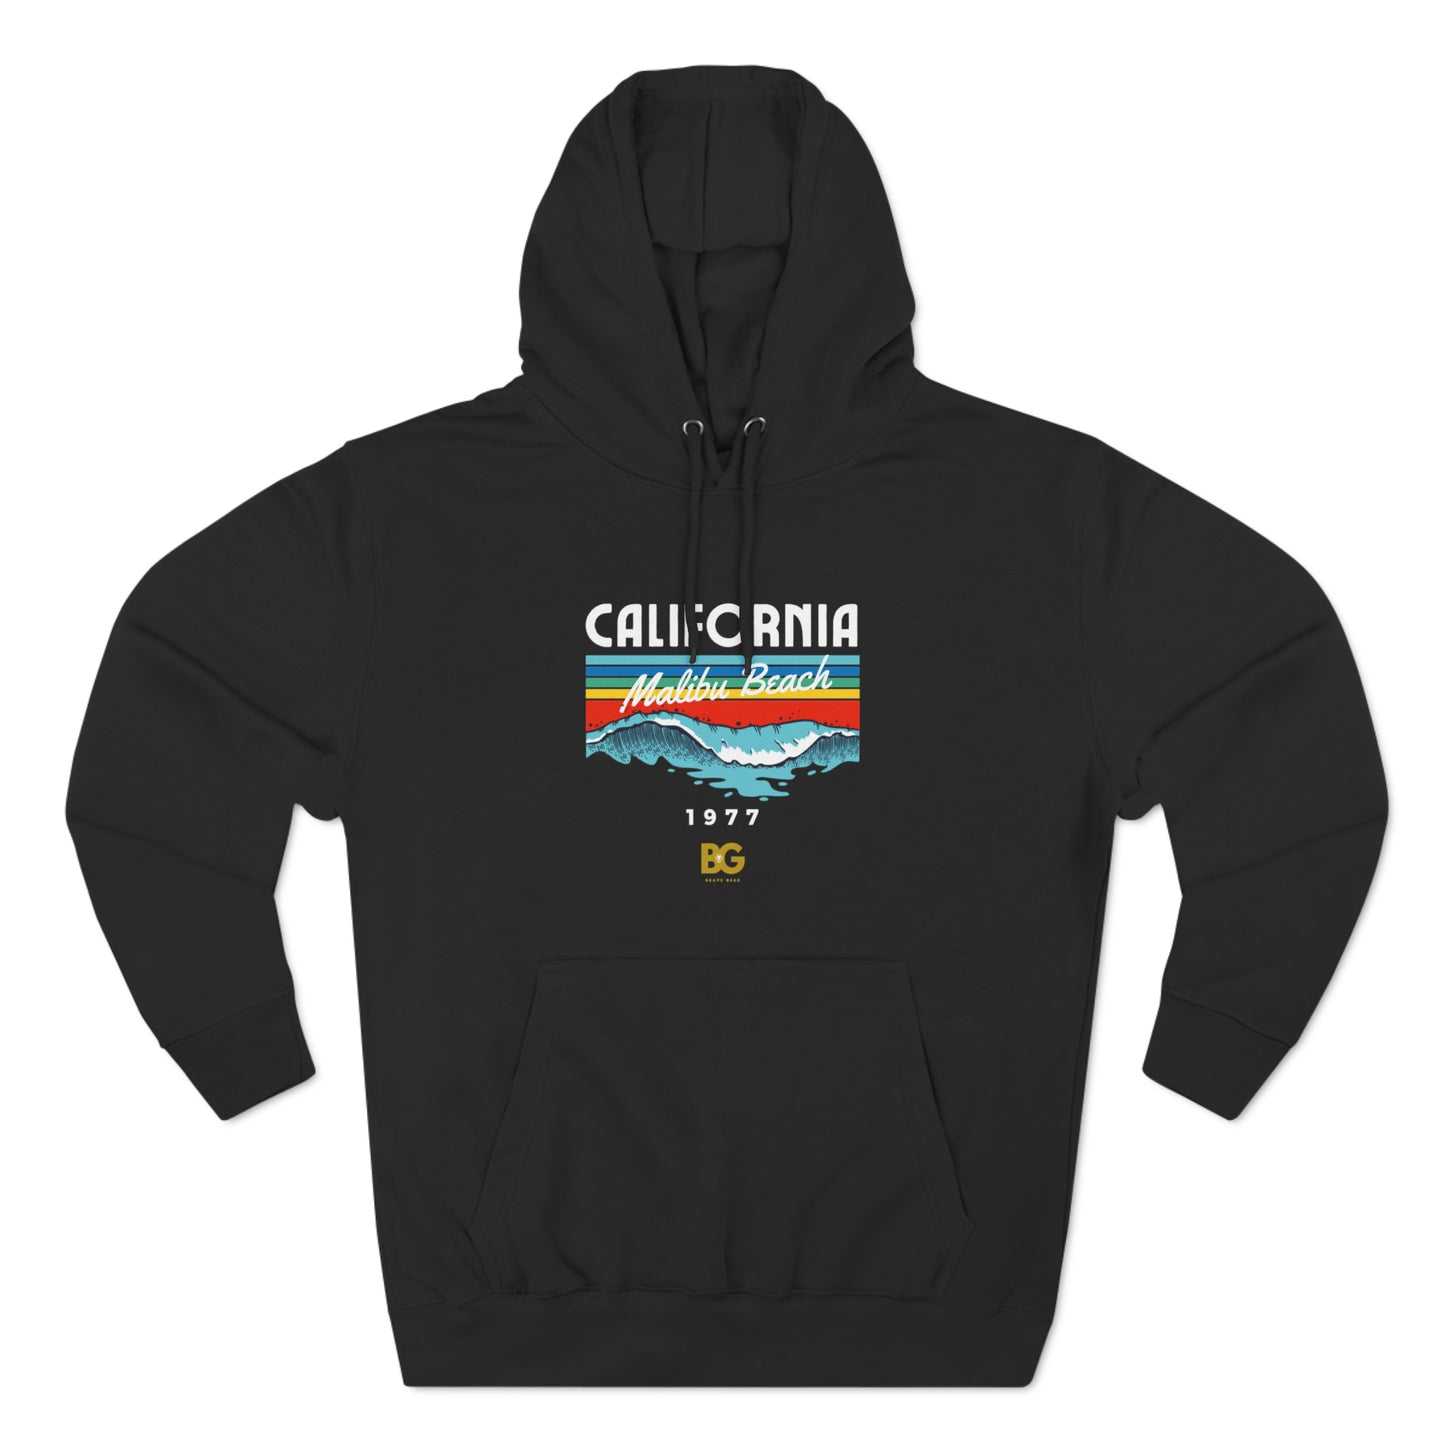 BG "California Malibu Beach 1977" Premium Pullover Hoodie